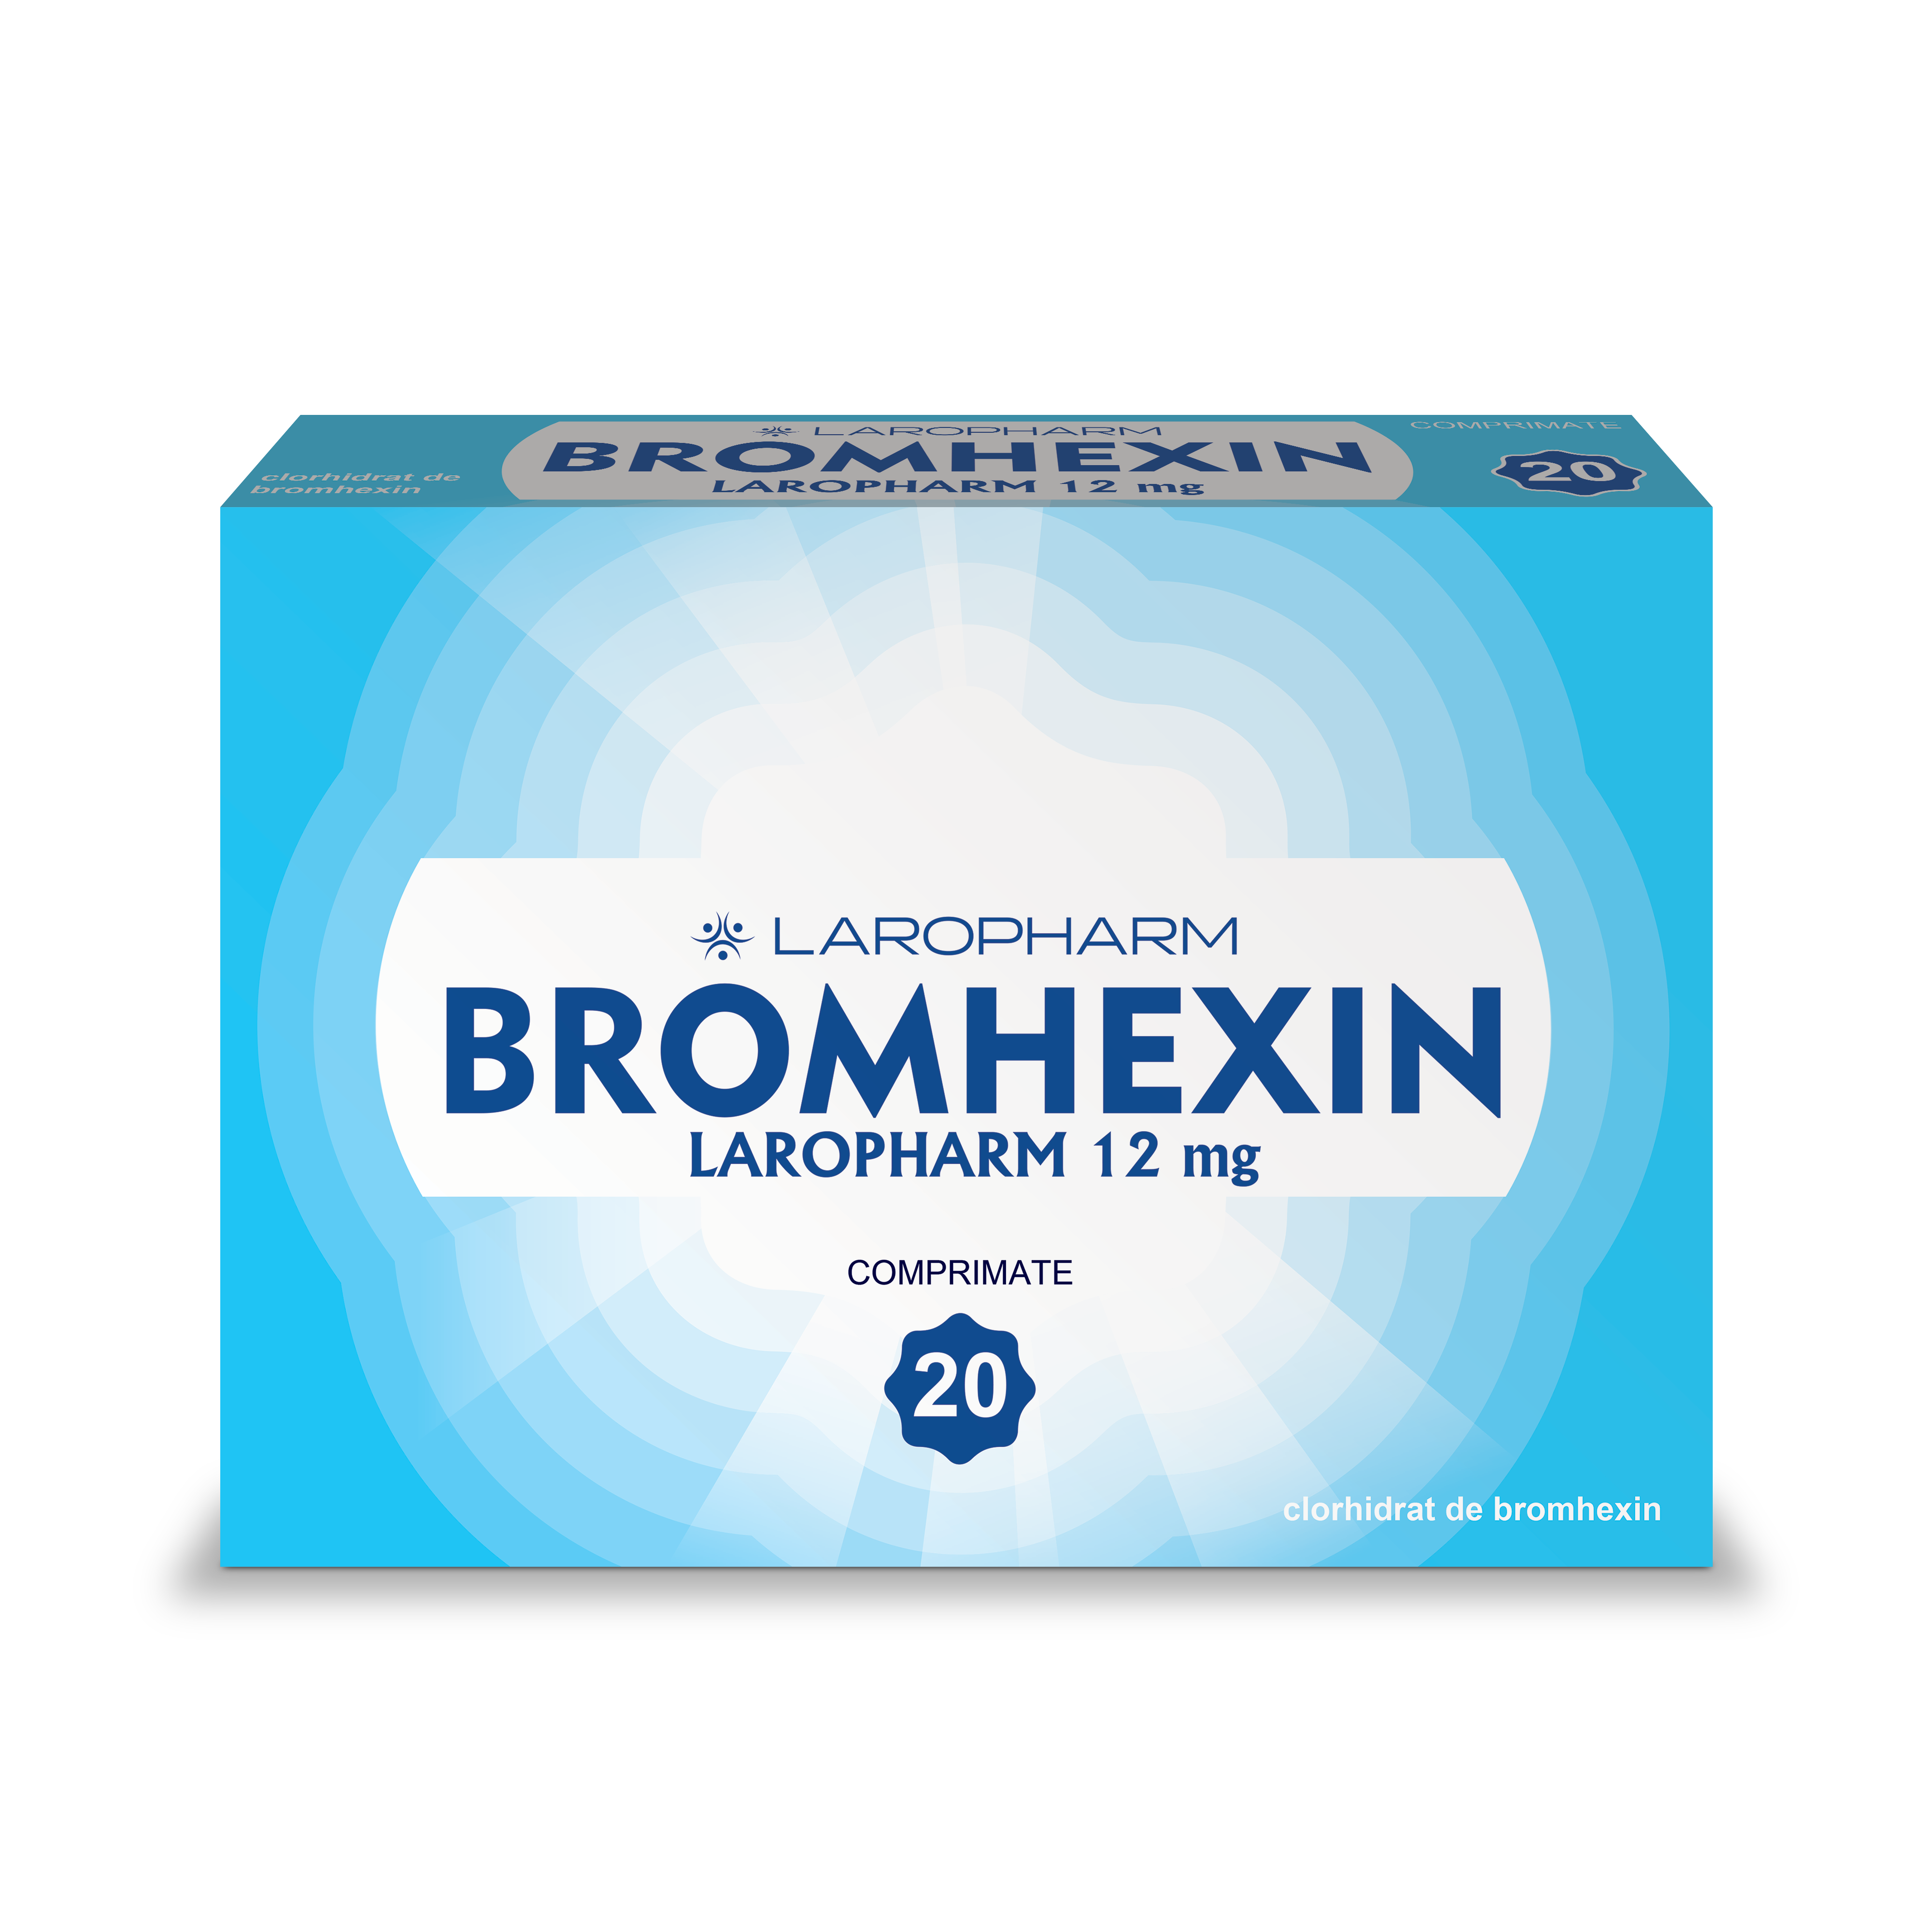 Raceala si gripa - Bromhexin 12mg, 20 comprimate, Laropharm, sinapis.ro